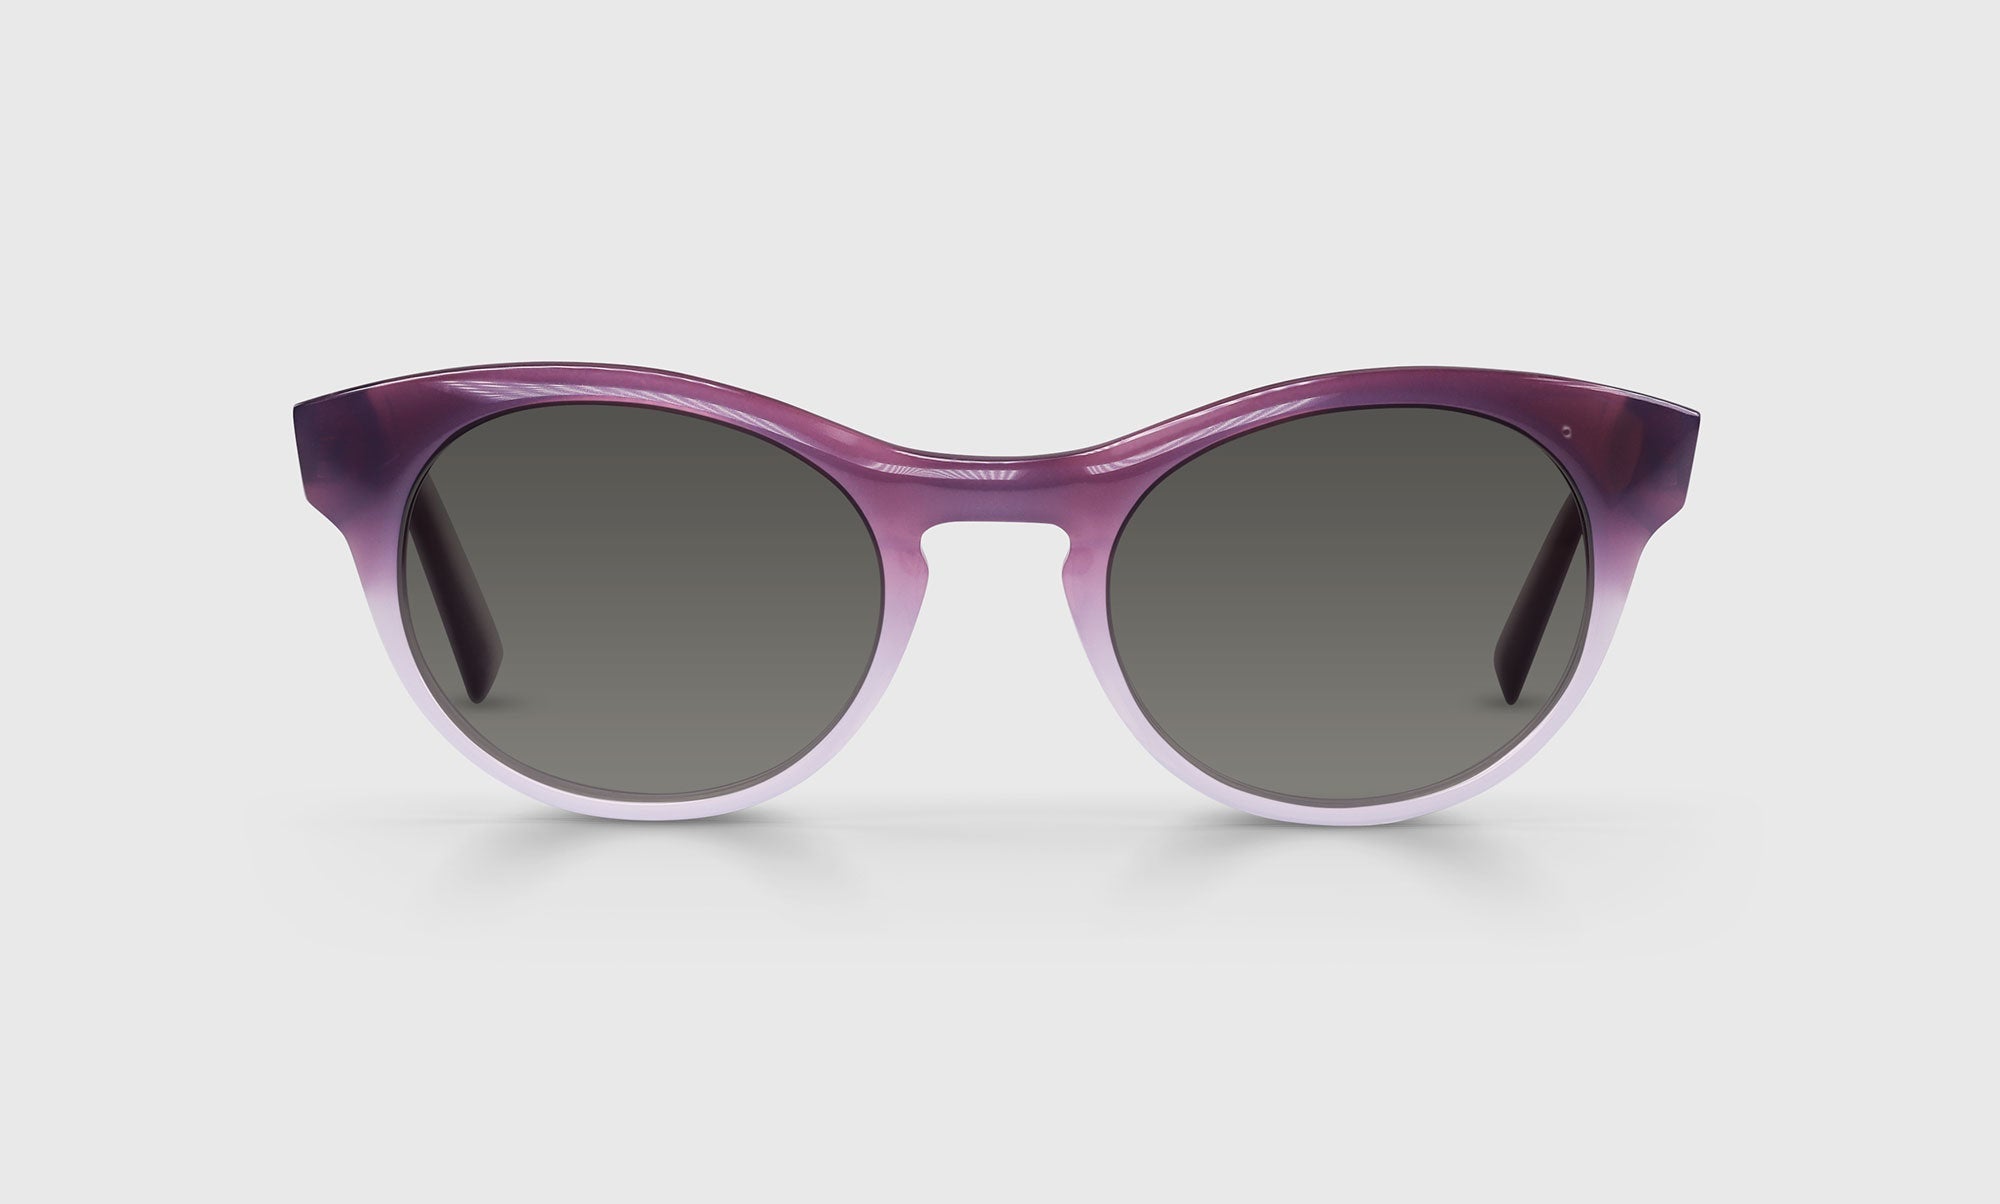 15-pg | eyebobs Biddy Dear, Cat Eye, Average, Bifocal Reader Sunglasses, Polarized Grey Sunglasses